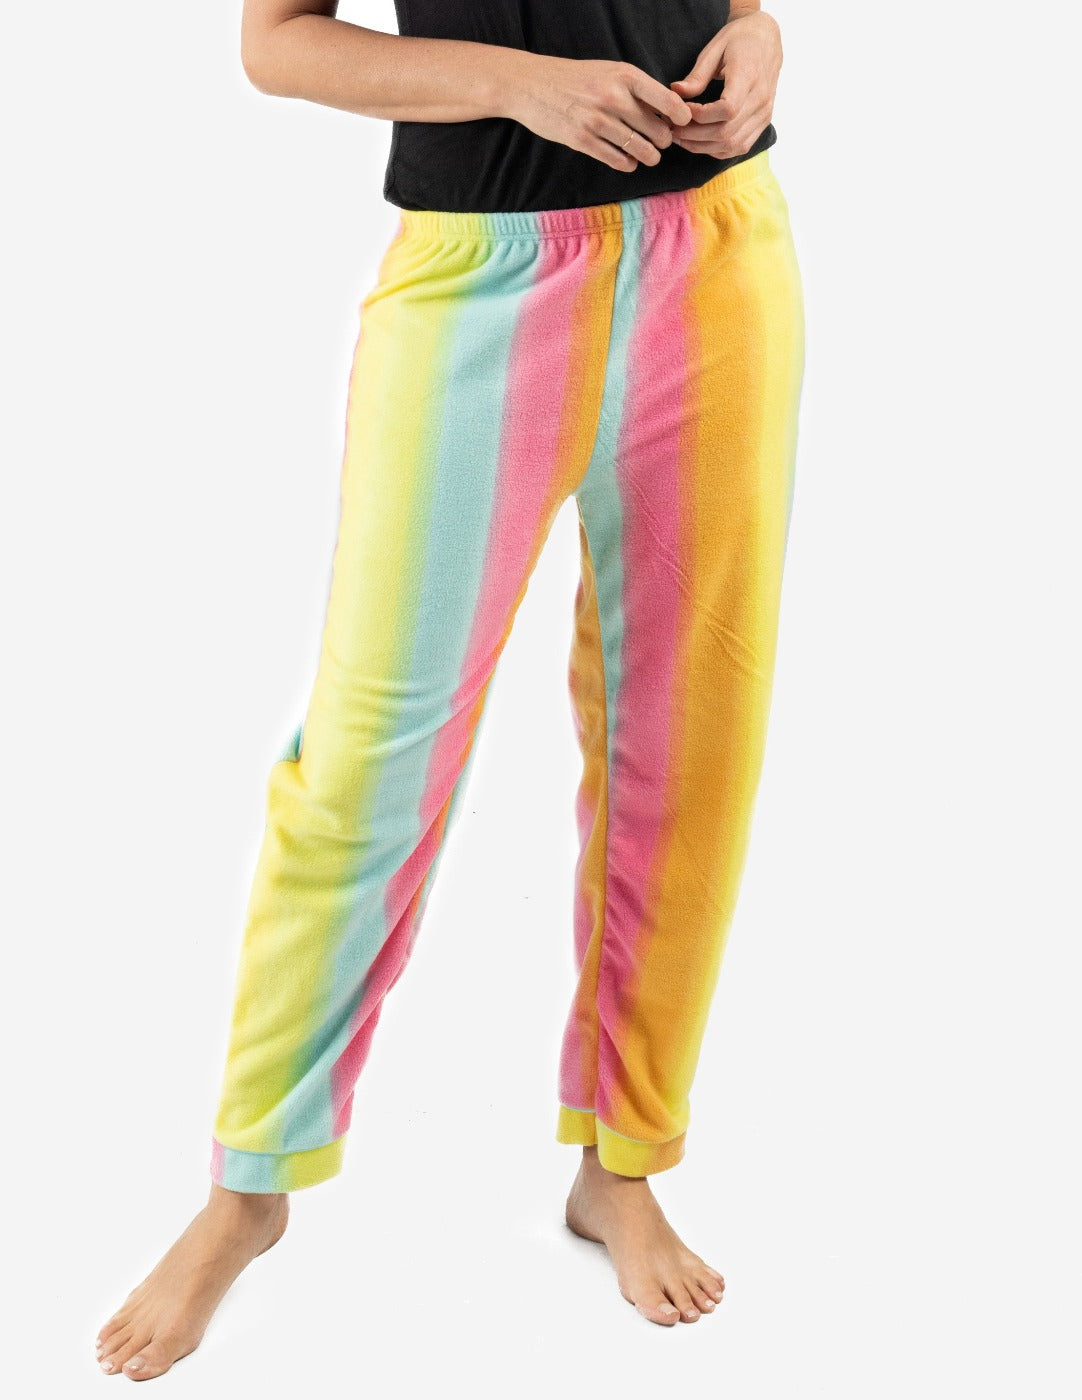 rainbow tie dye women's fleece pants